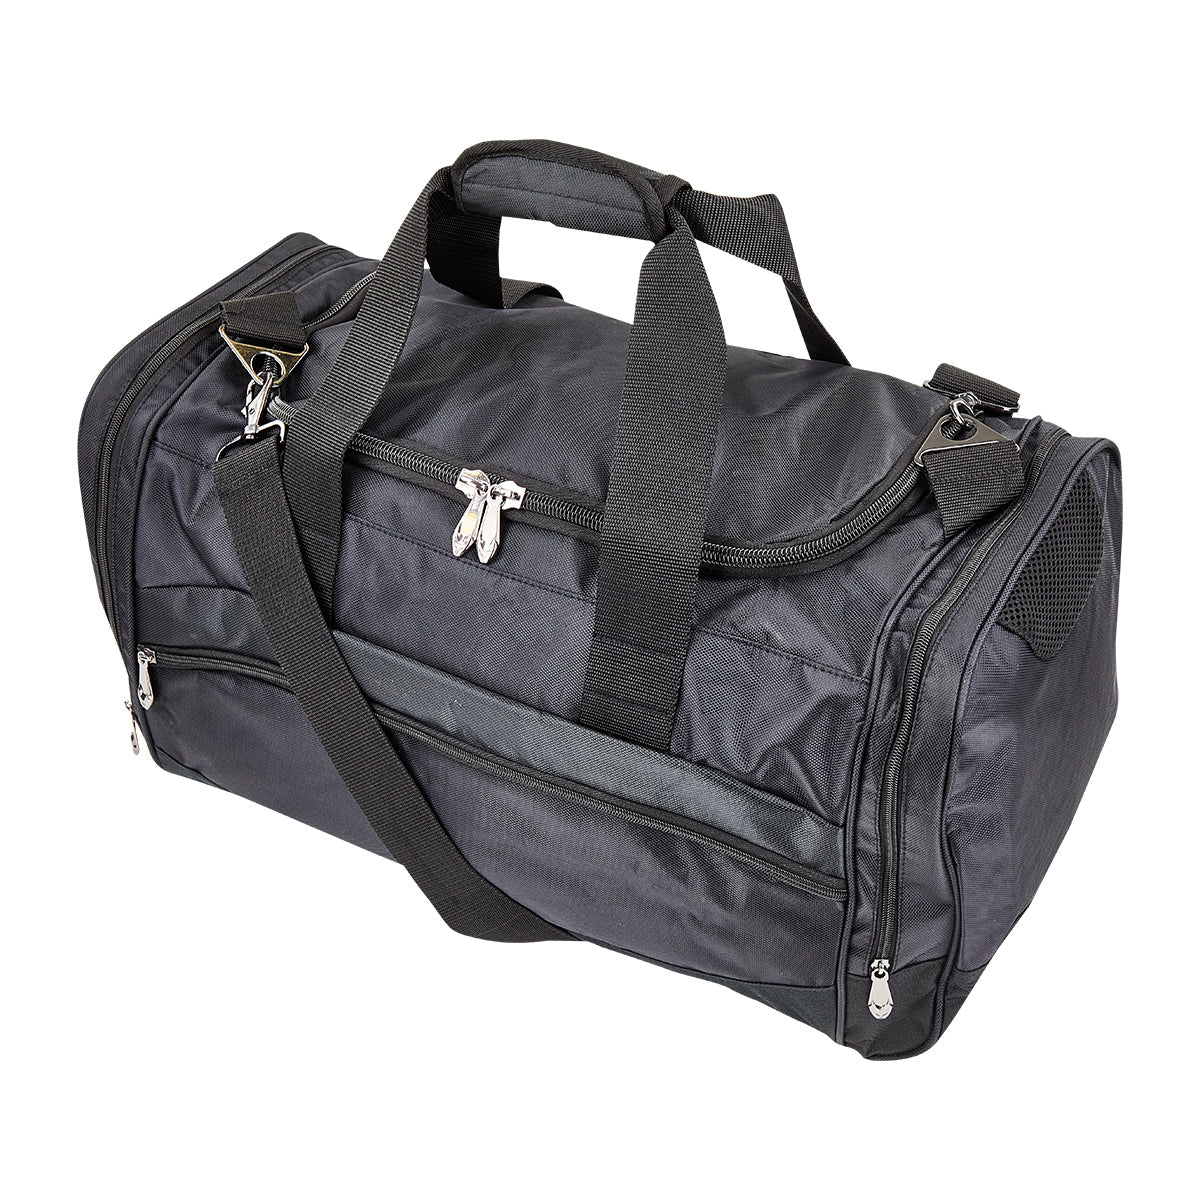 Premium Sport Bag - Extra Large Extra Large Black